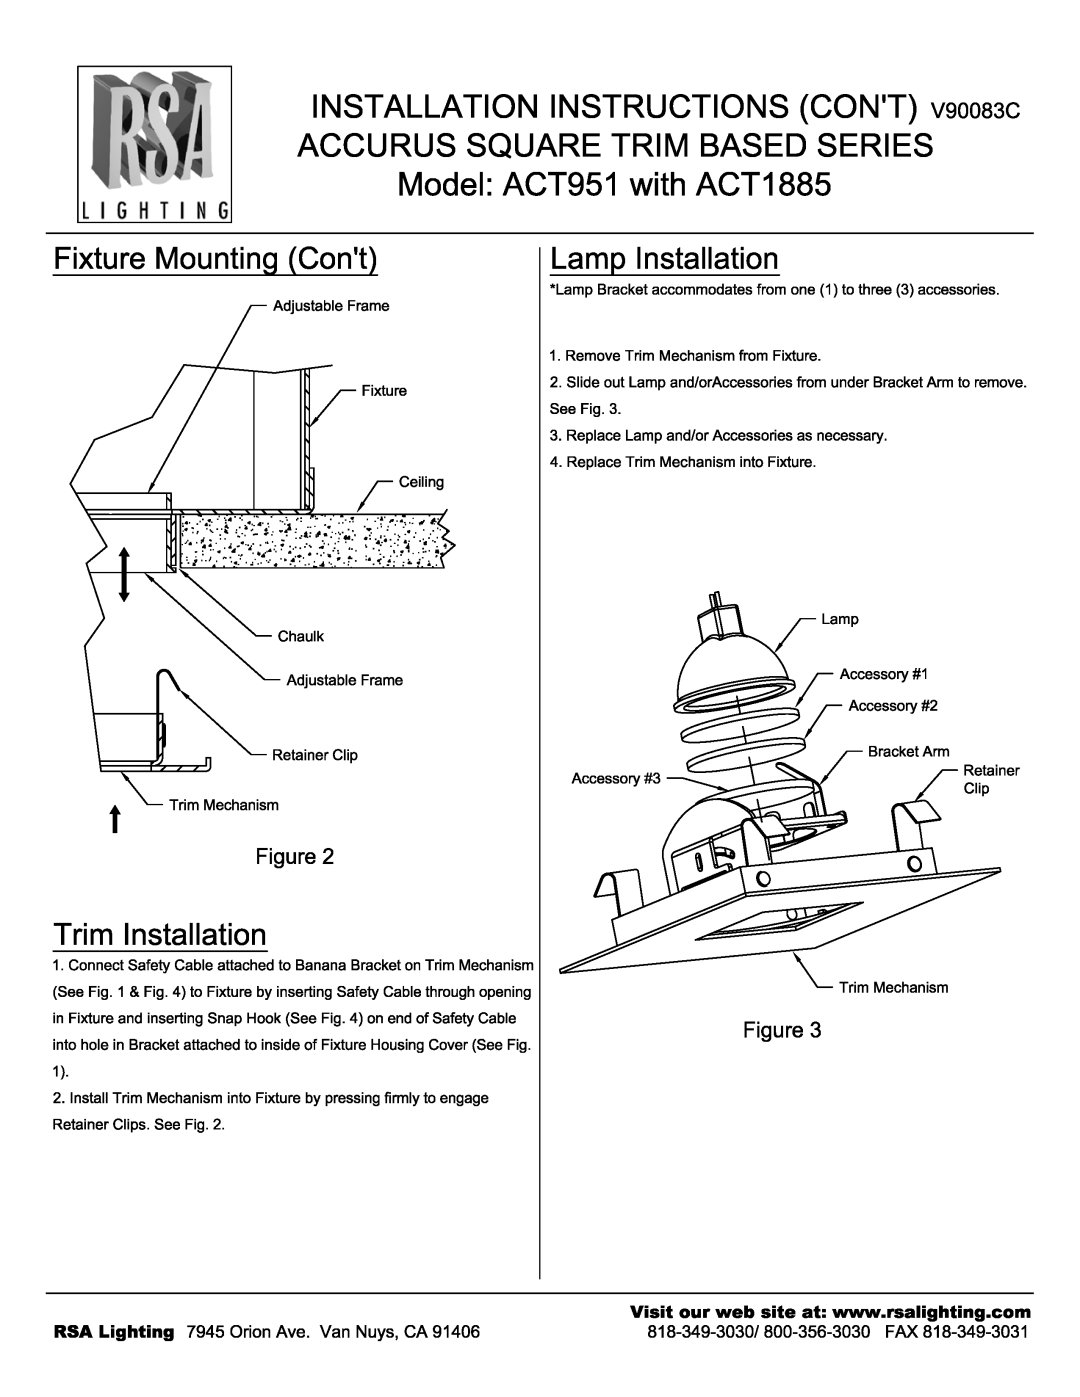 Cooper Lighting ACT1885 manual 